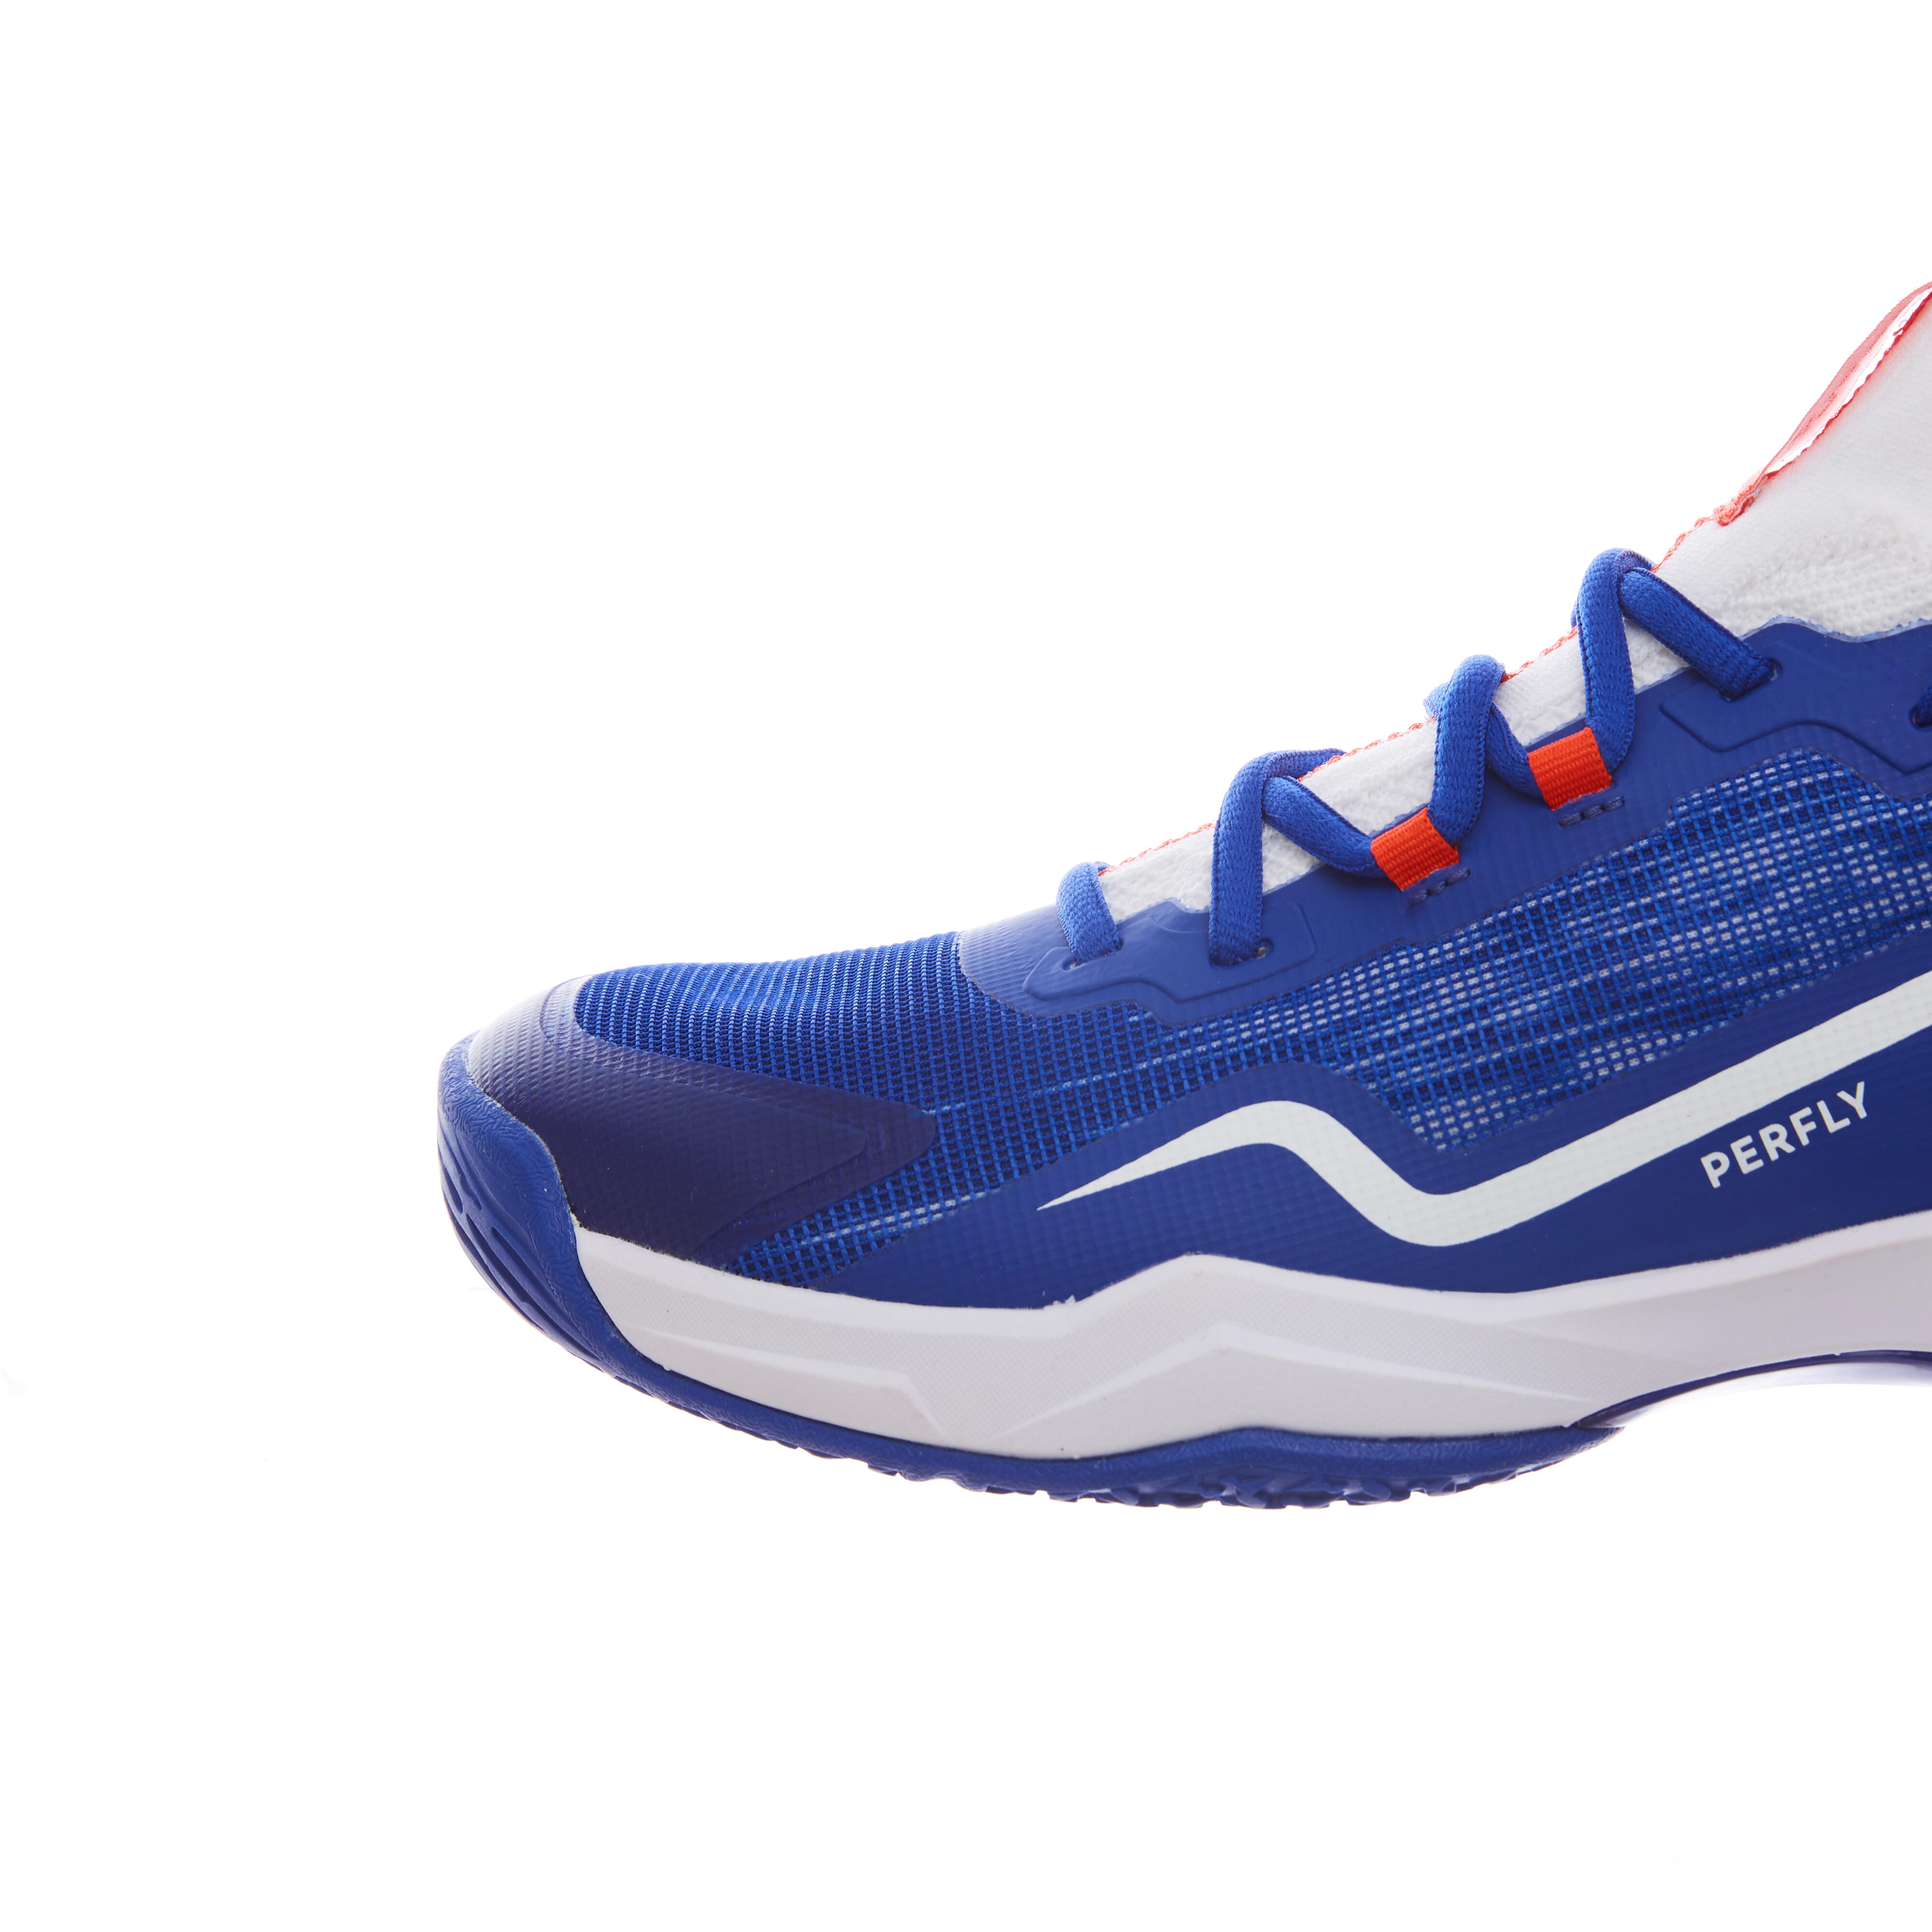 Chaussures de badminton Ultra Lite homme - BS 900 bleu - PERFLY